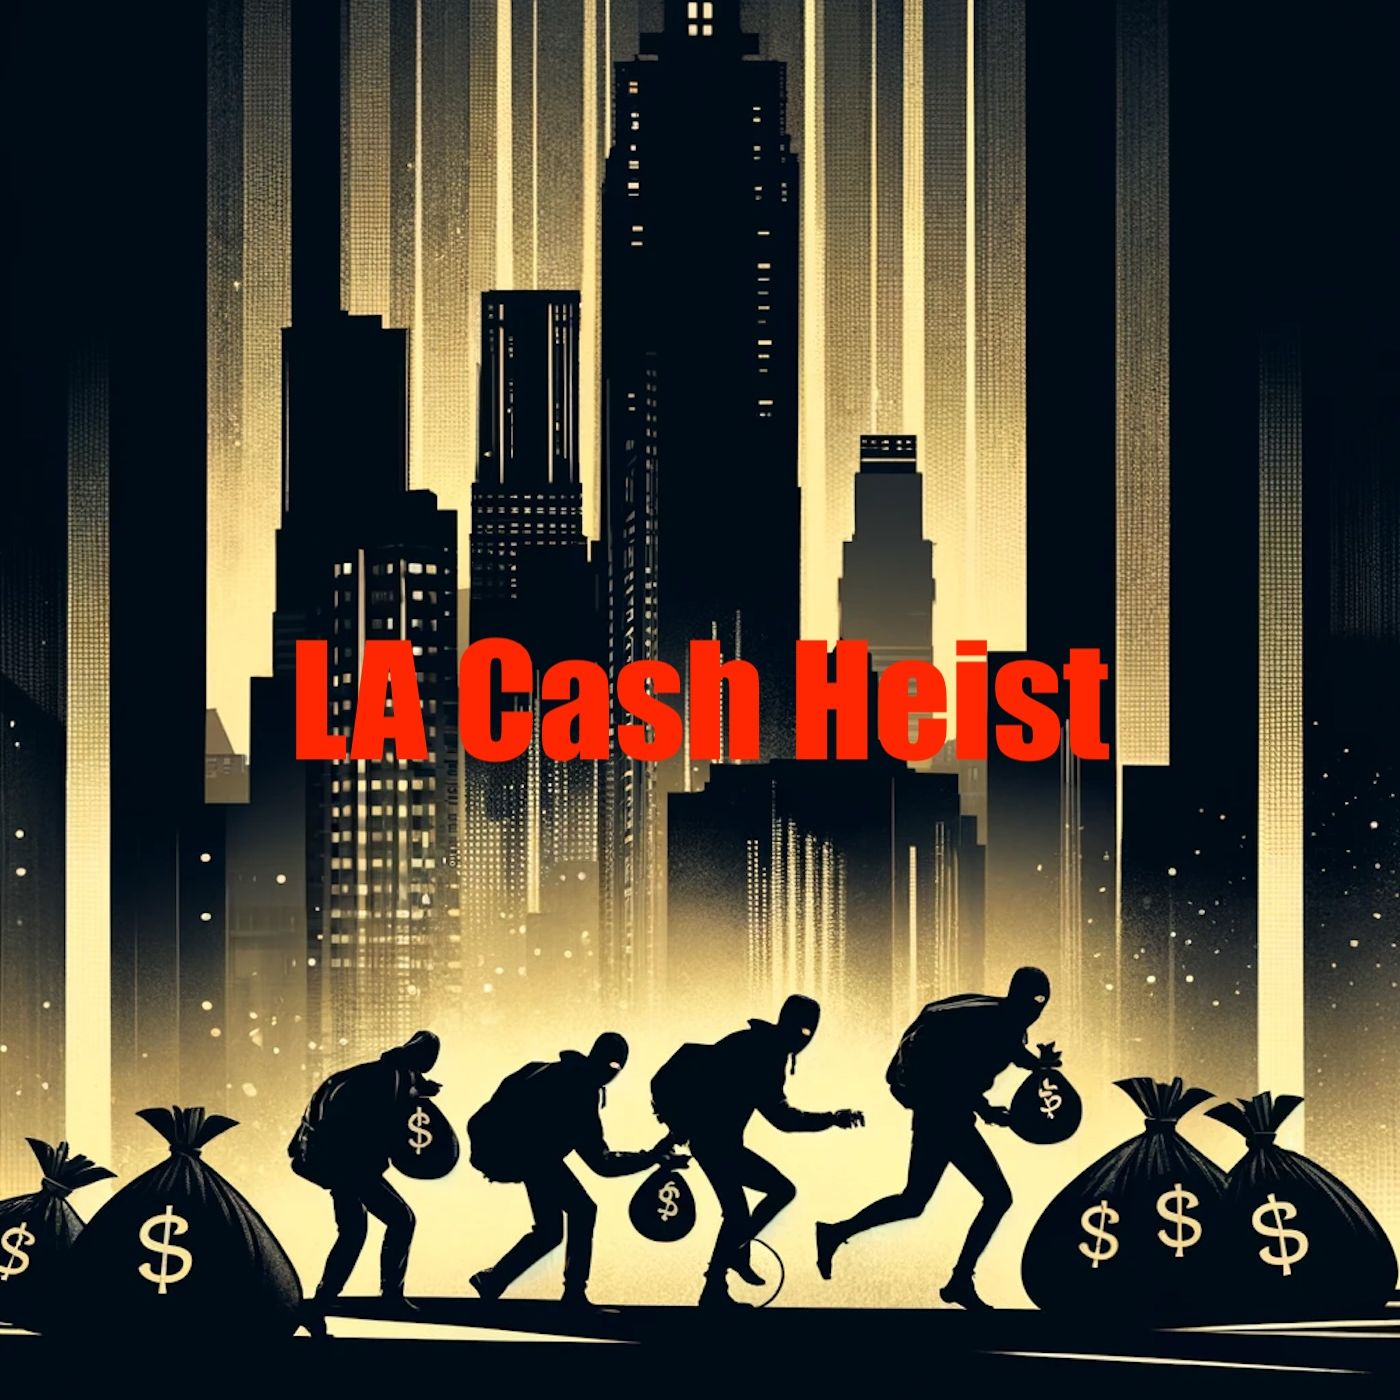 LA Cash Heist!